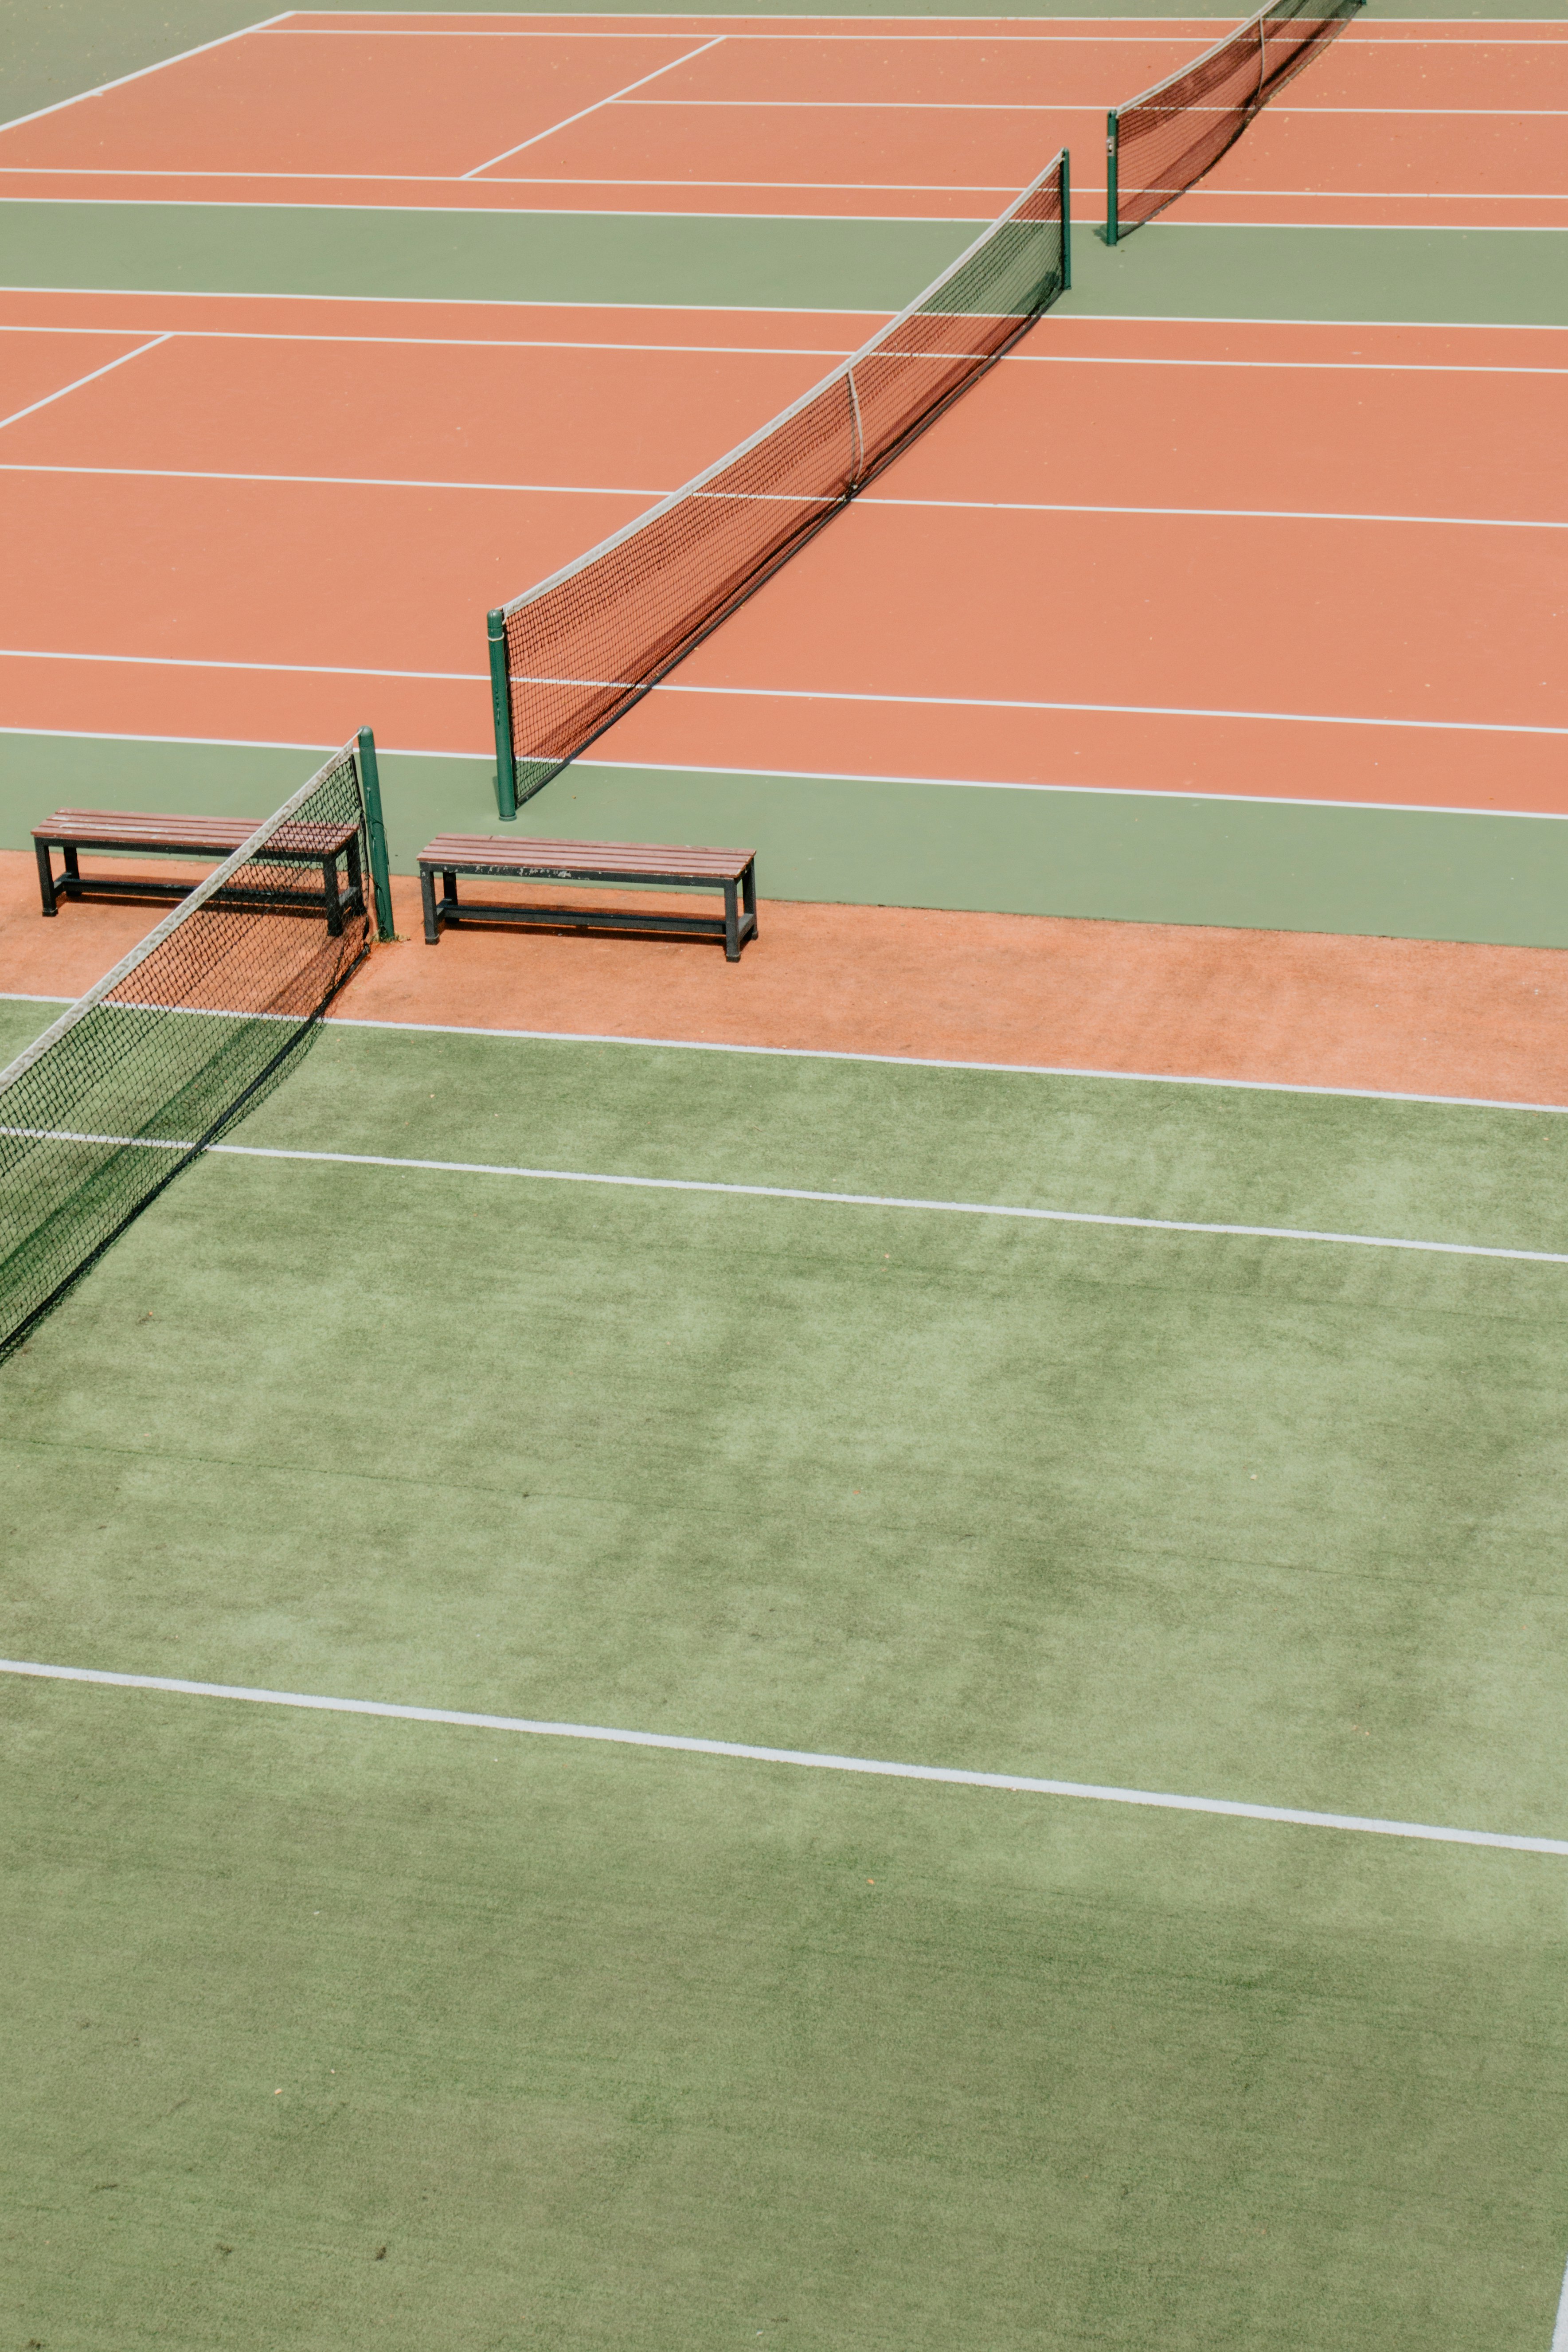 covington troy add photo tennis court photoshoot